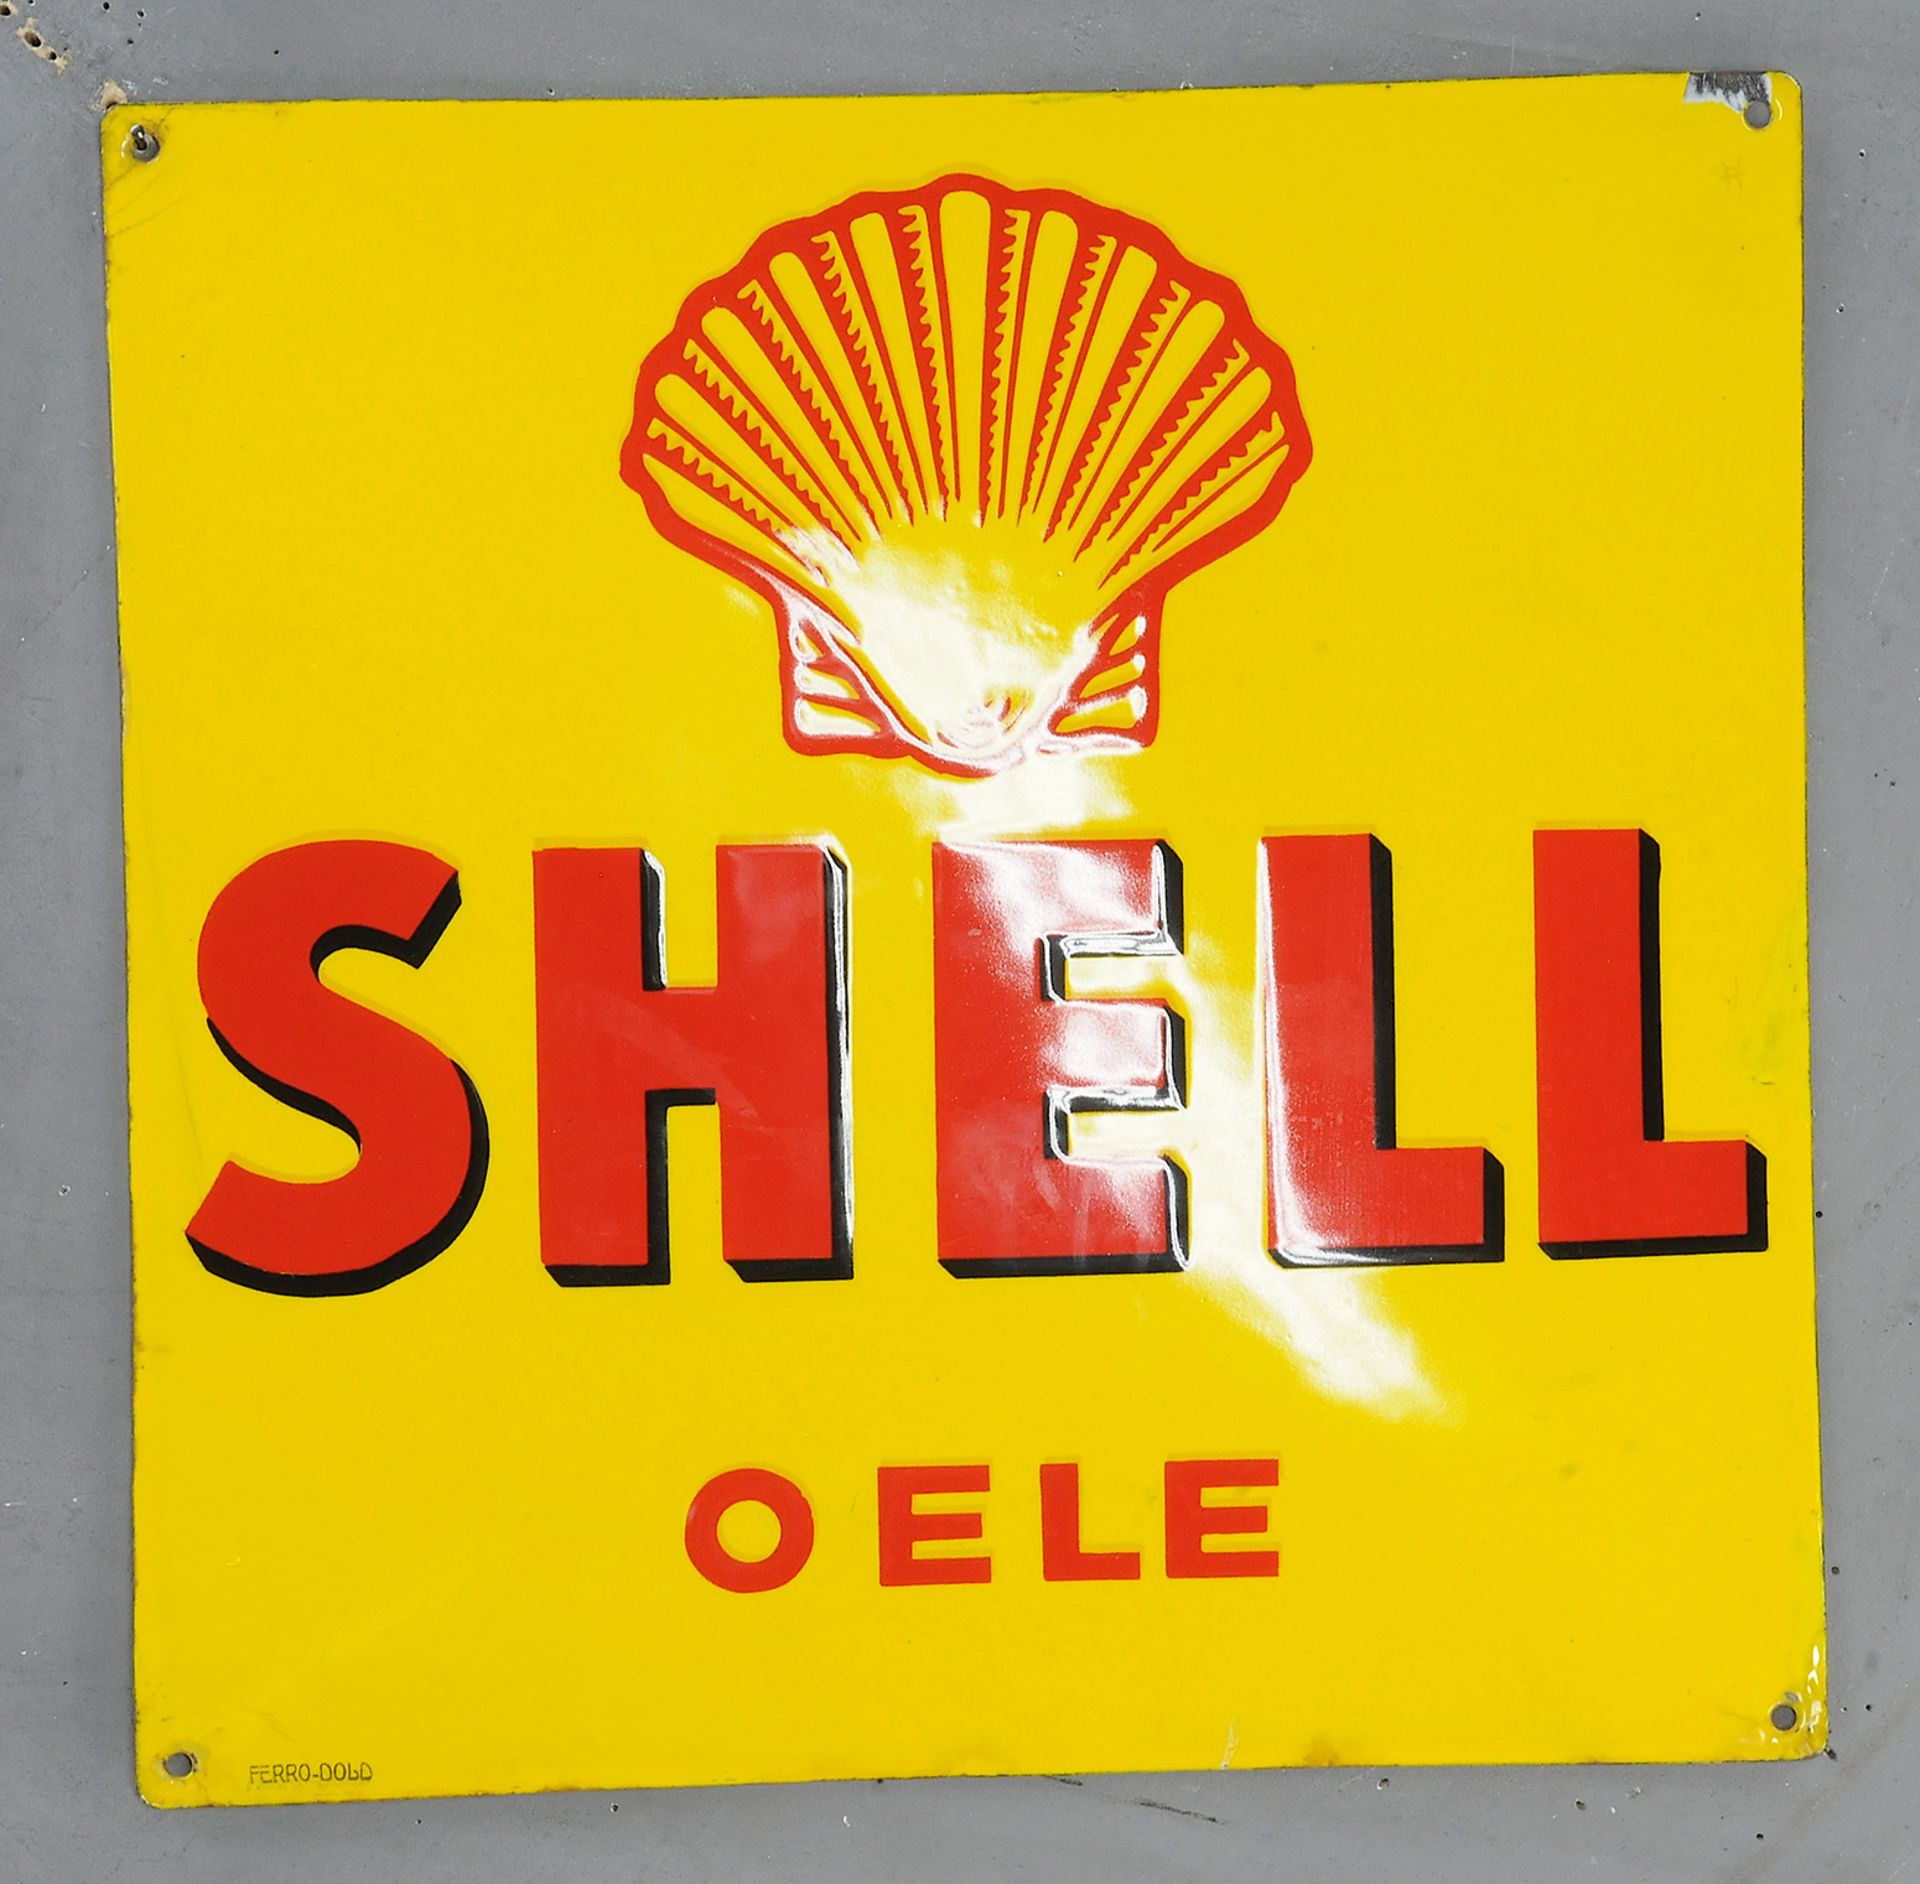 Shell Oele - Image 3 of 3